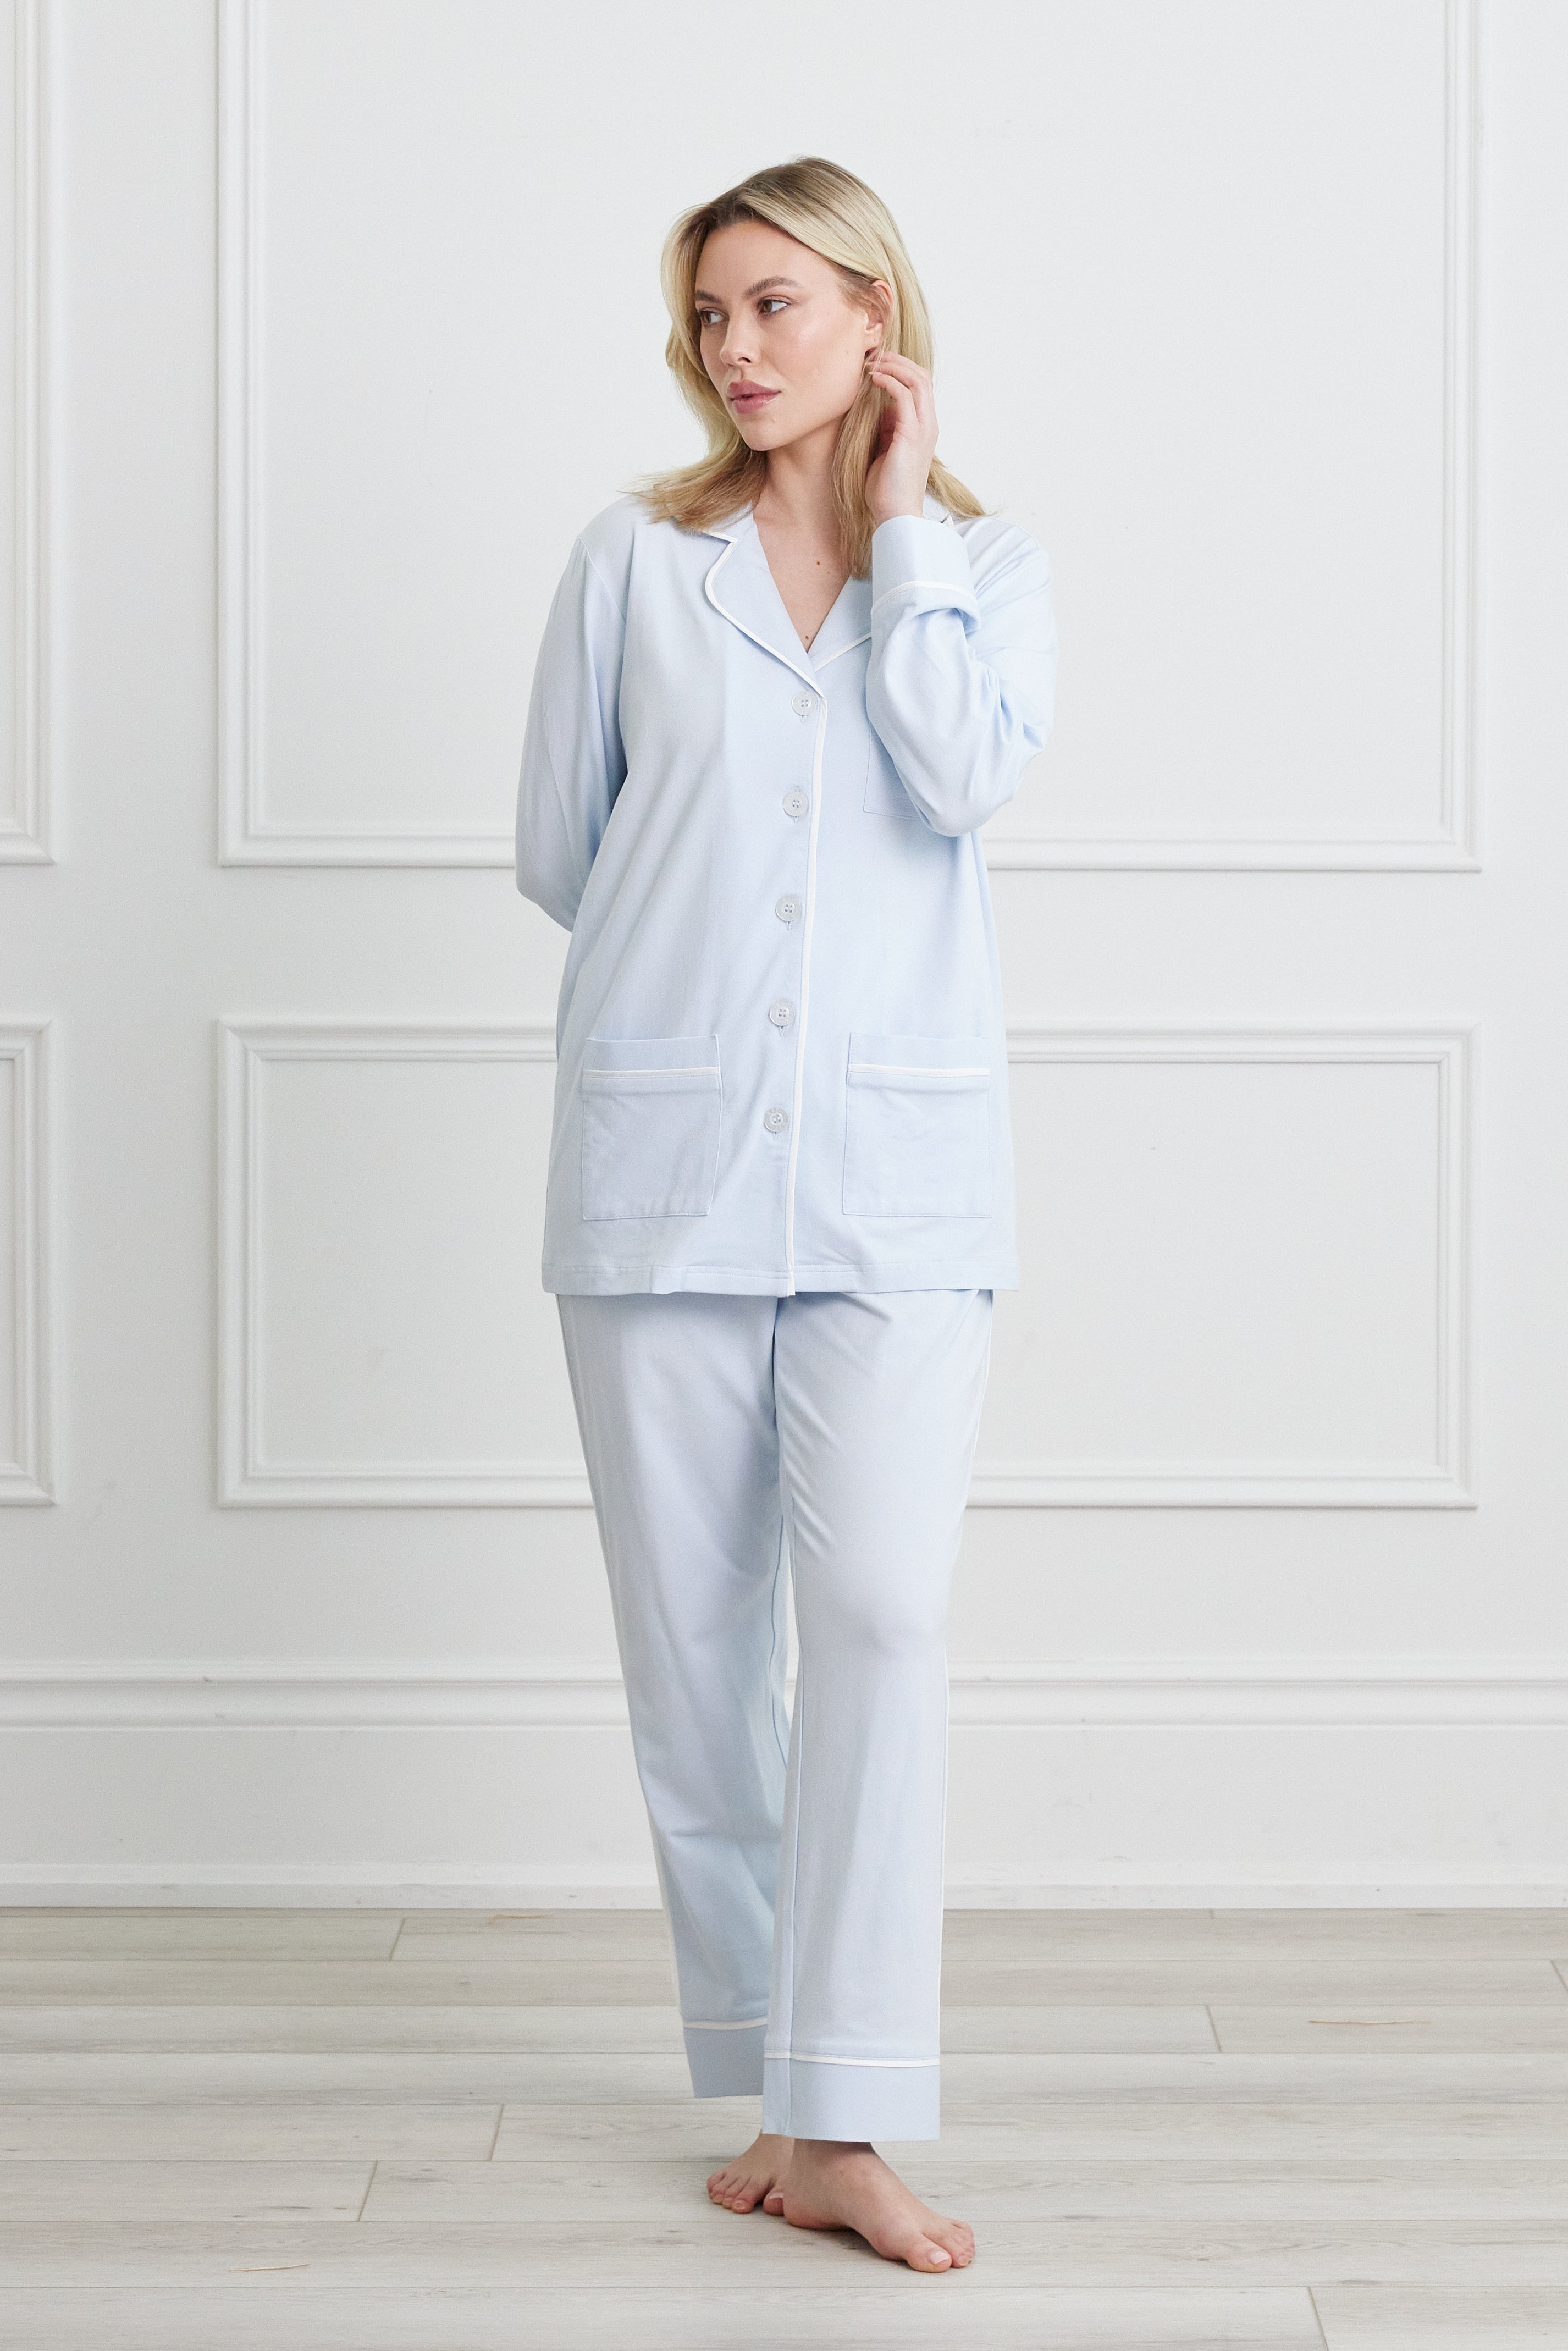 KIP Luxe Stretch Cotton Pajama Set in Mist Blue